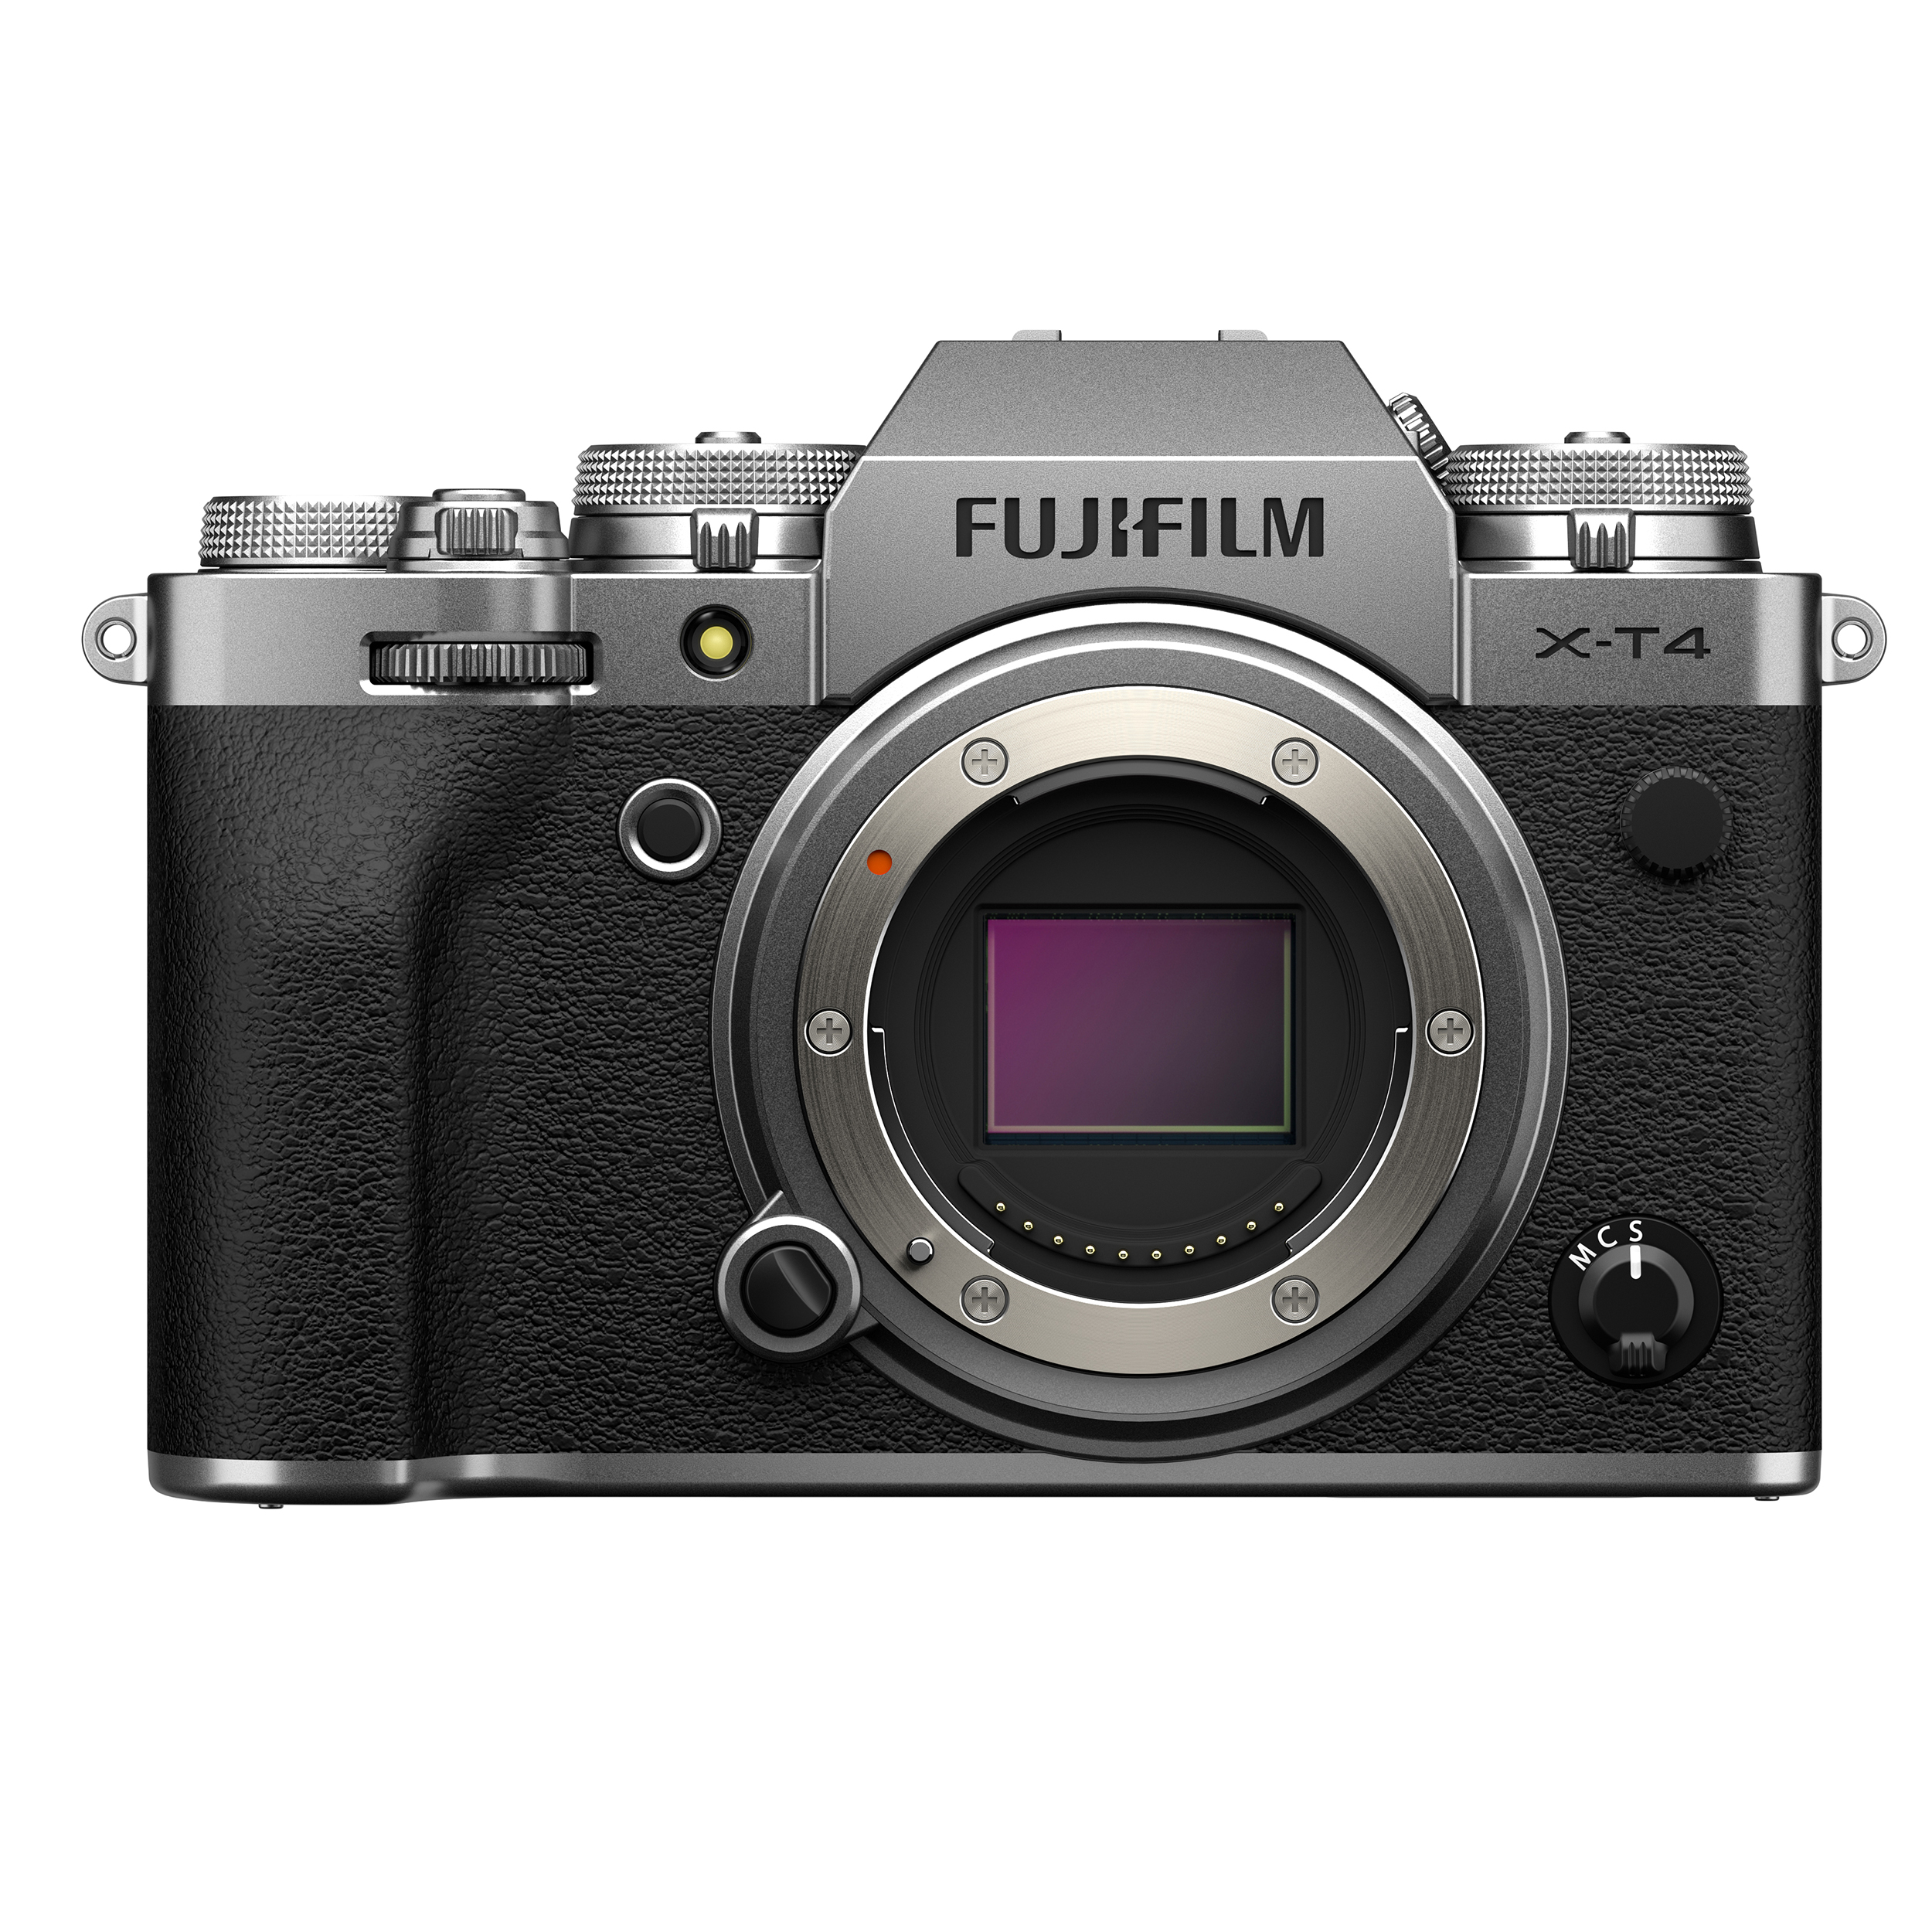 Grenade, Espagne - 16 juillet 2020 : Fujifilm XT4, Nouvel appareil